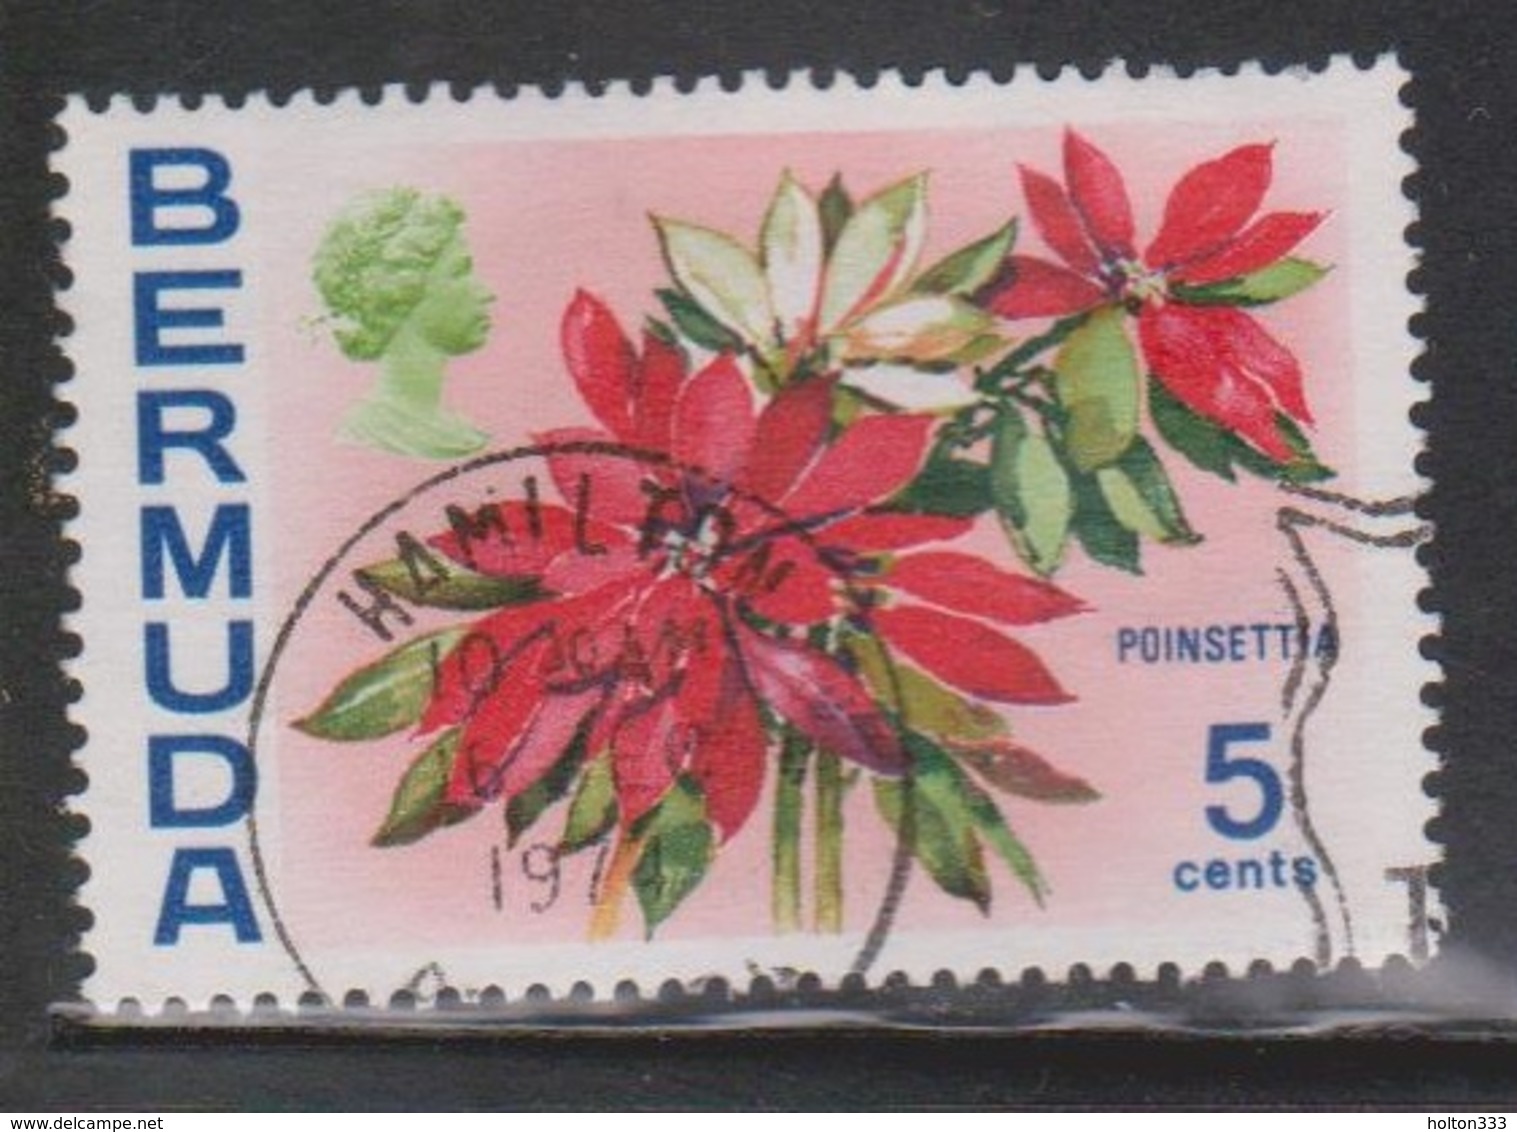 BERMUDA Scott # 259b Used - Flowers - Watermark Upright - Bermuda